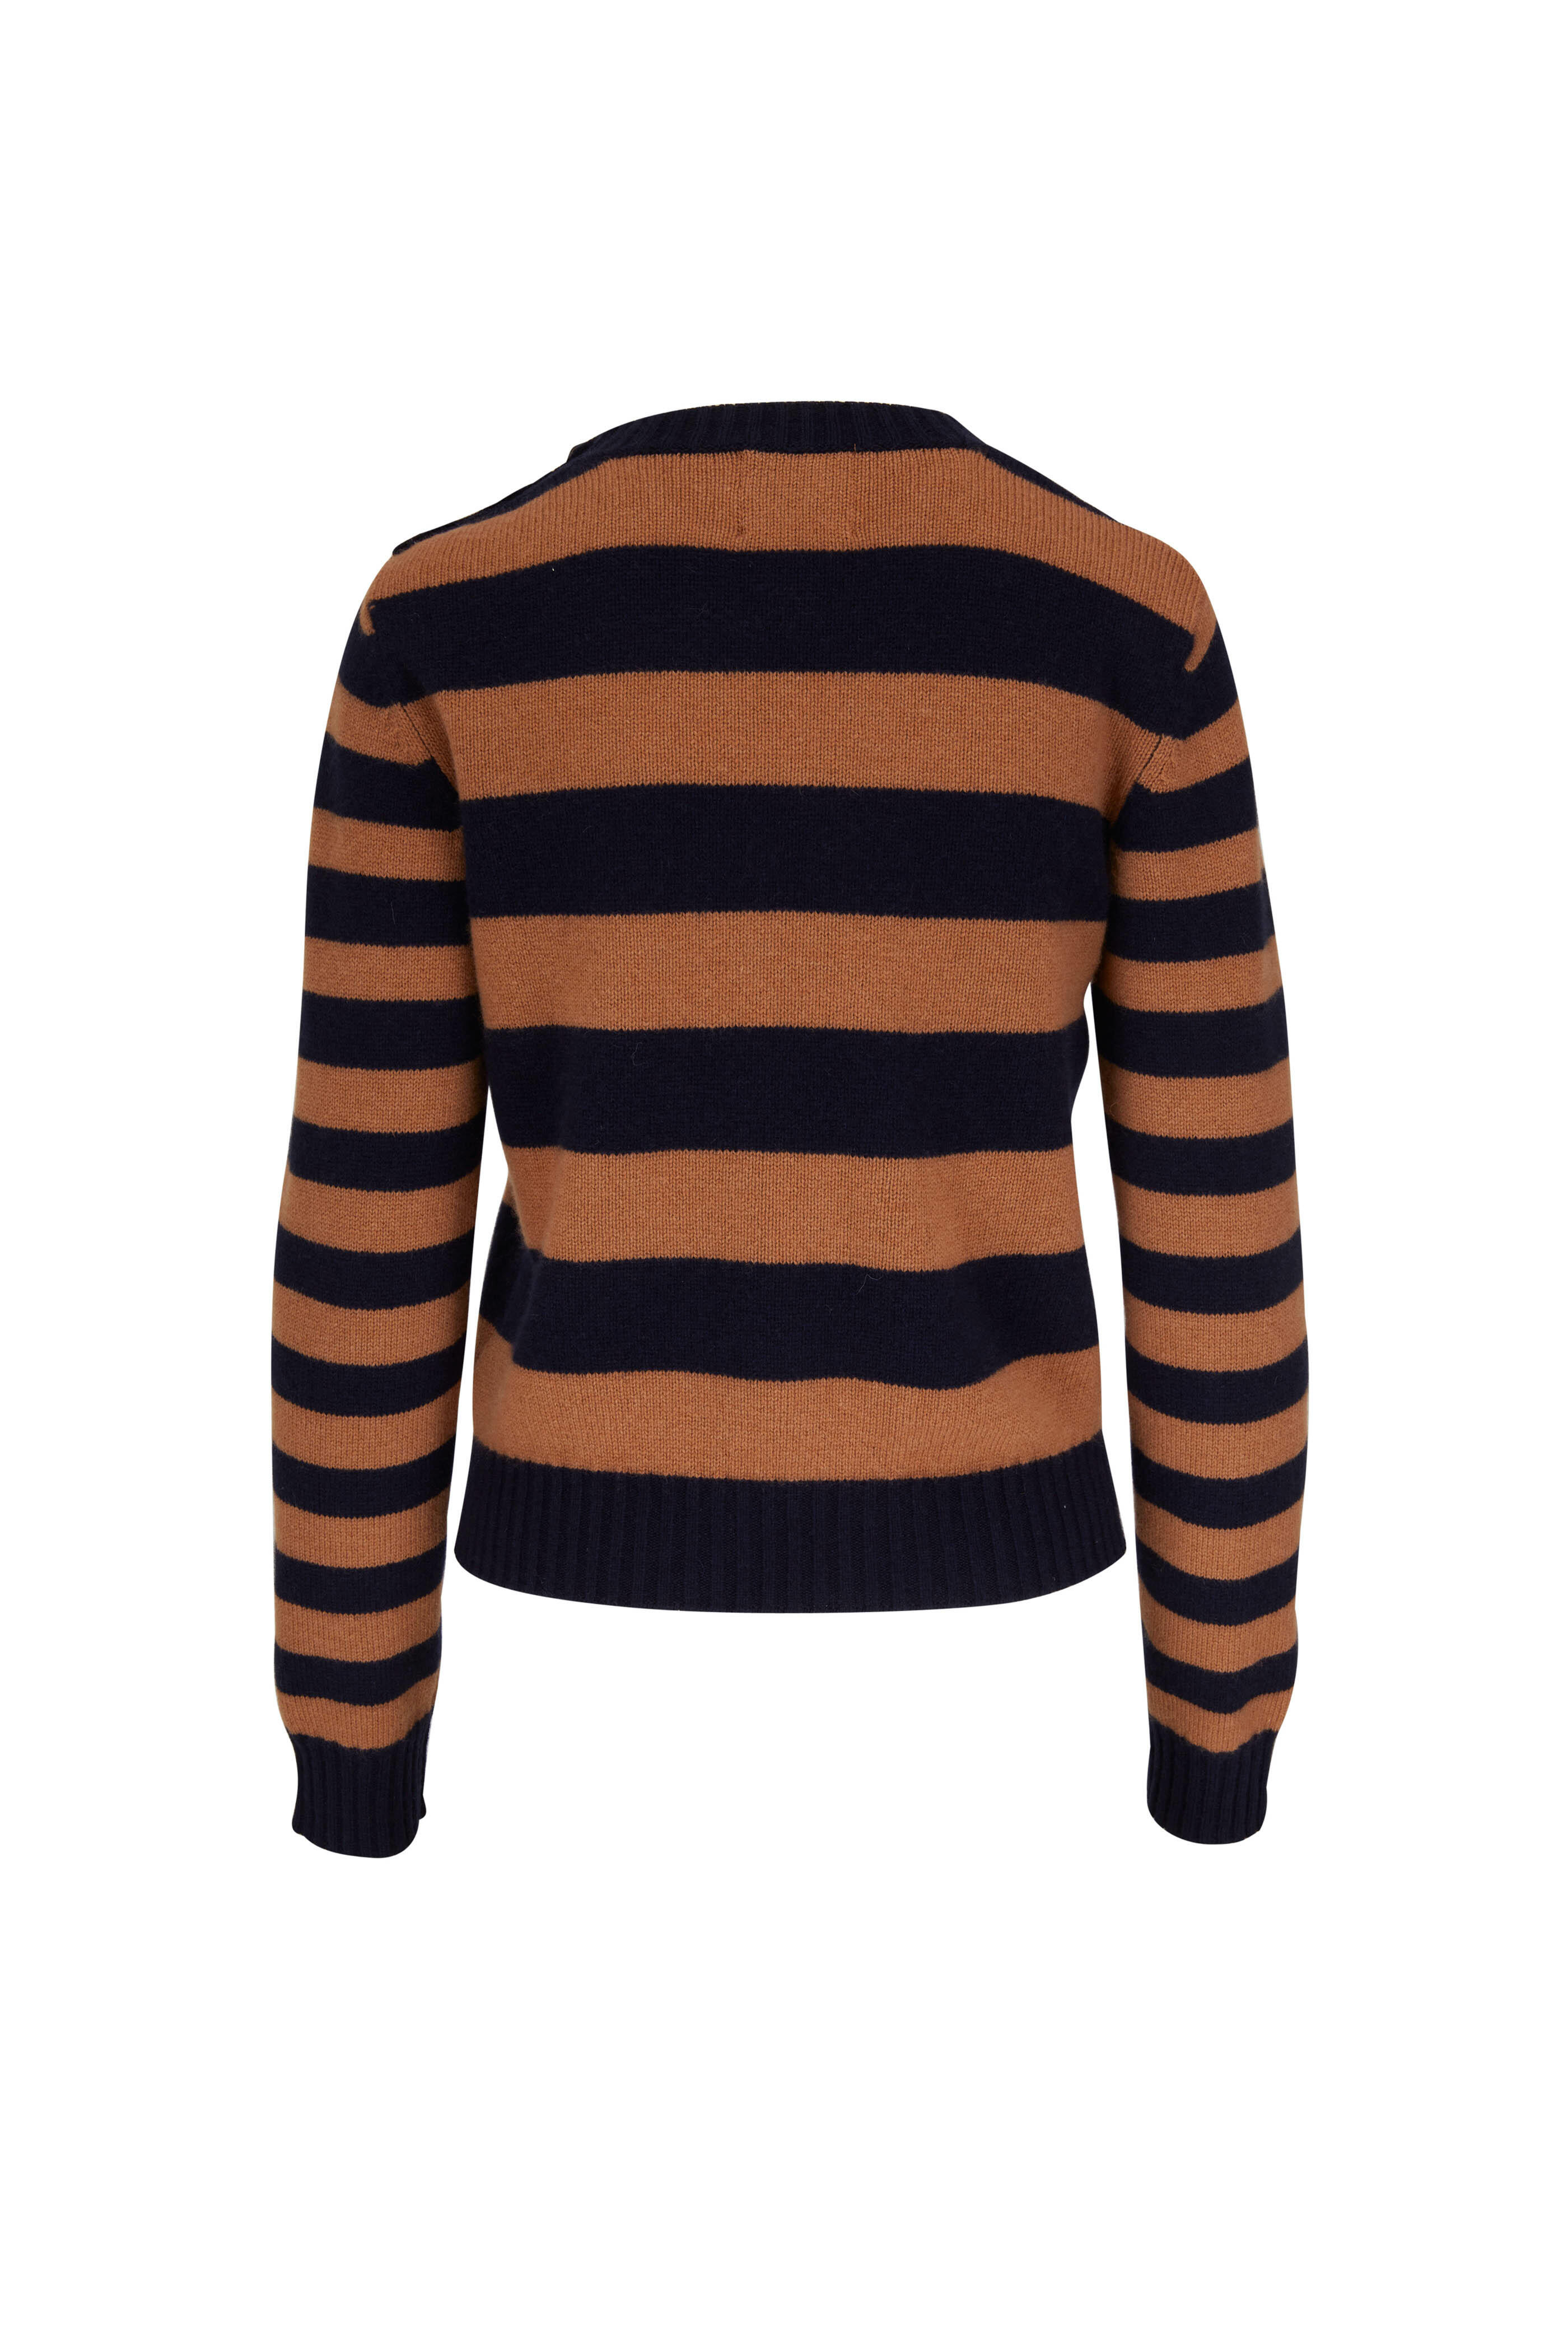 Jumper 1234 - Navy & Camel Stripe Cashmere Sweater